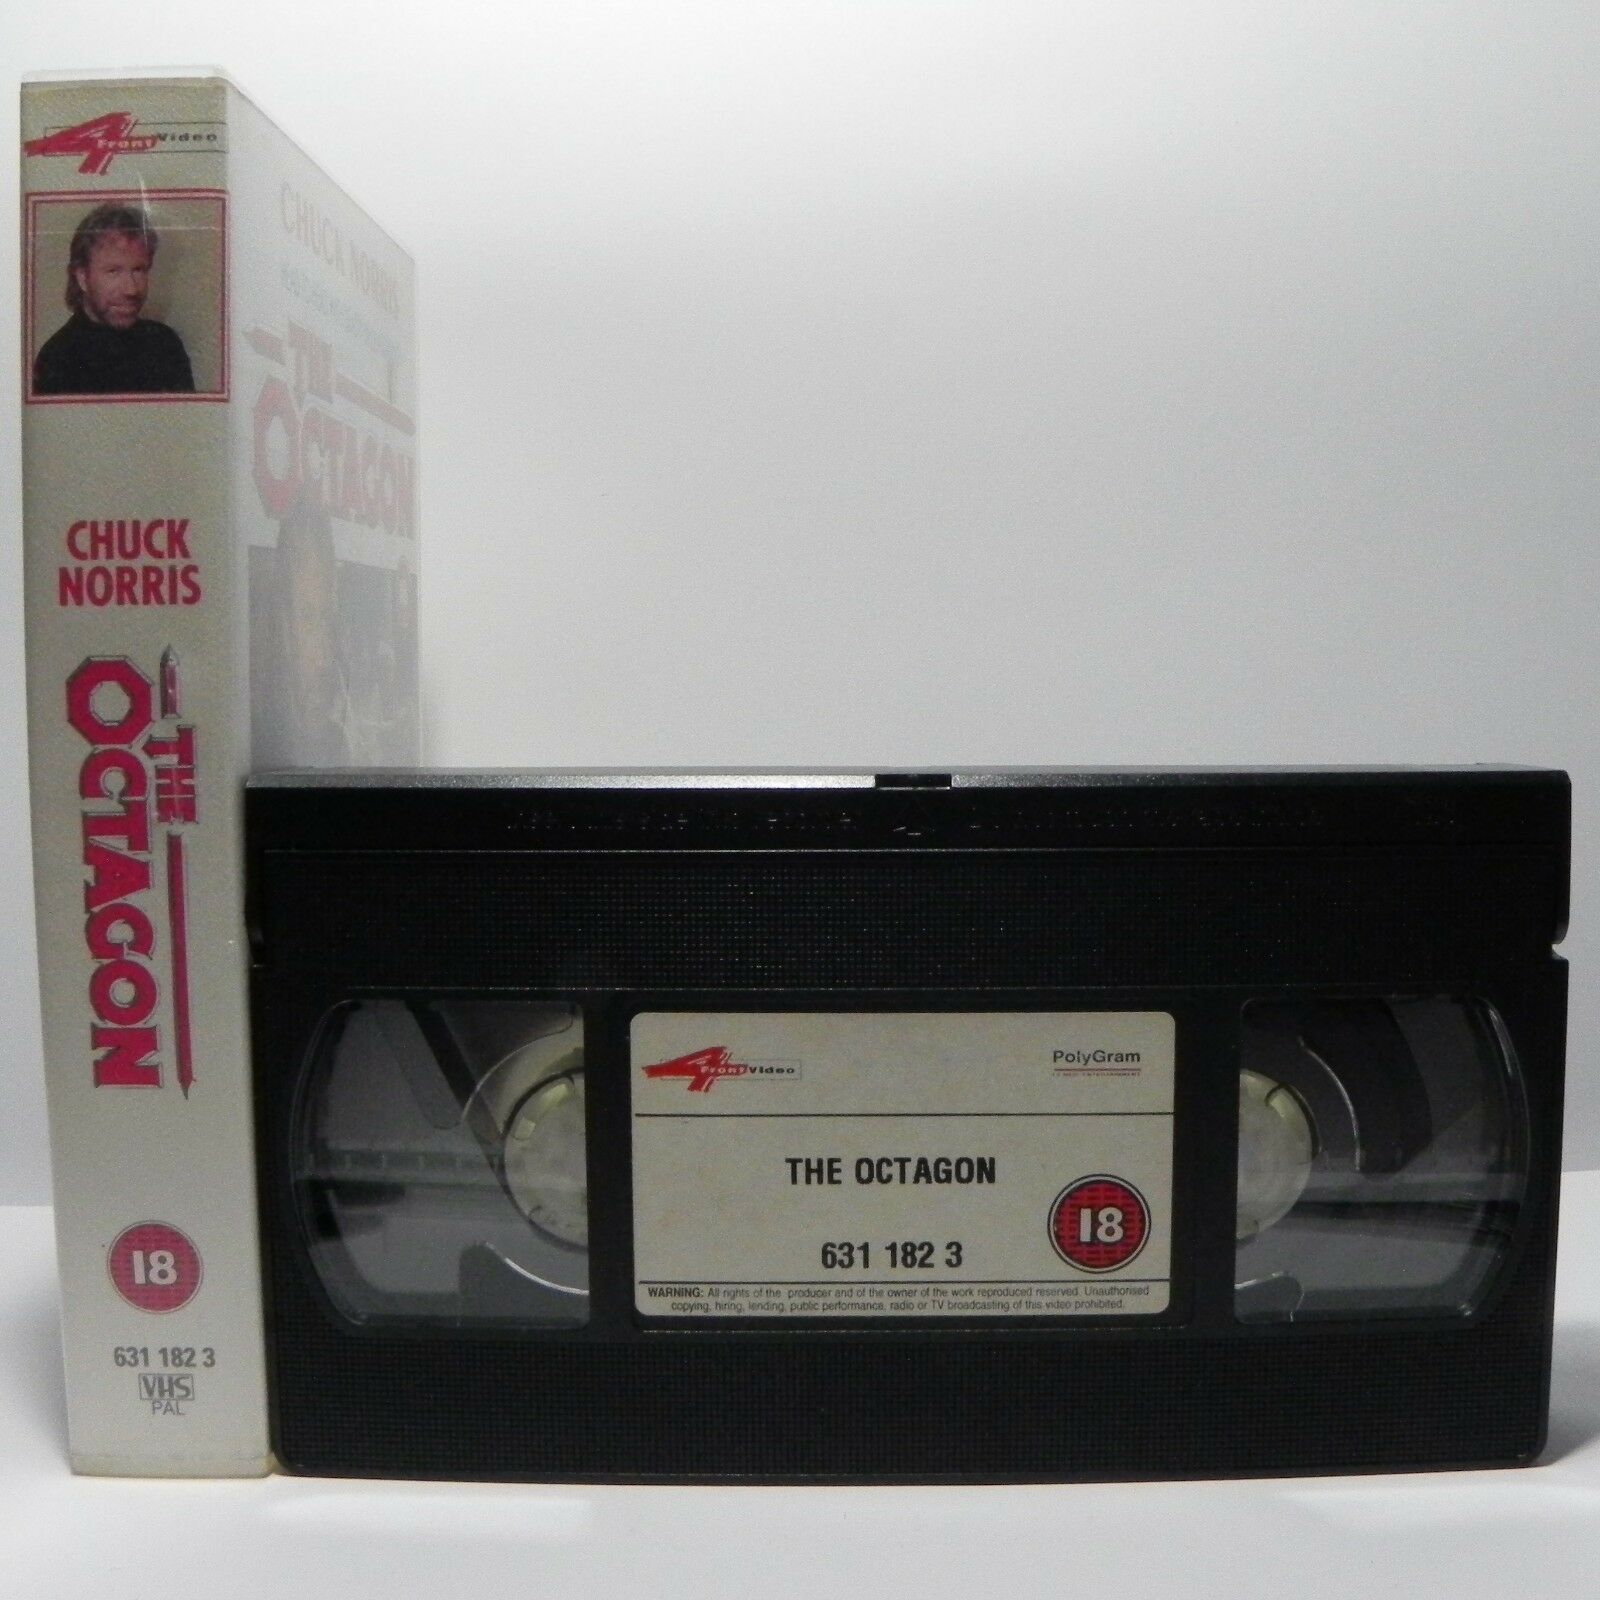 The Octagon: Chuck Norris - Martial Arts (1994) - L.Van Cleef/K.Carlson - VHS-